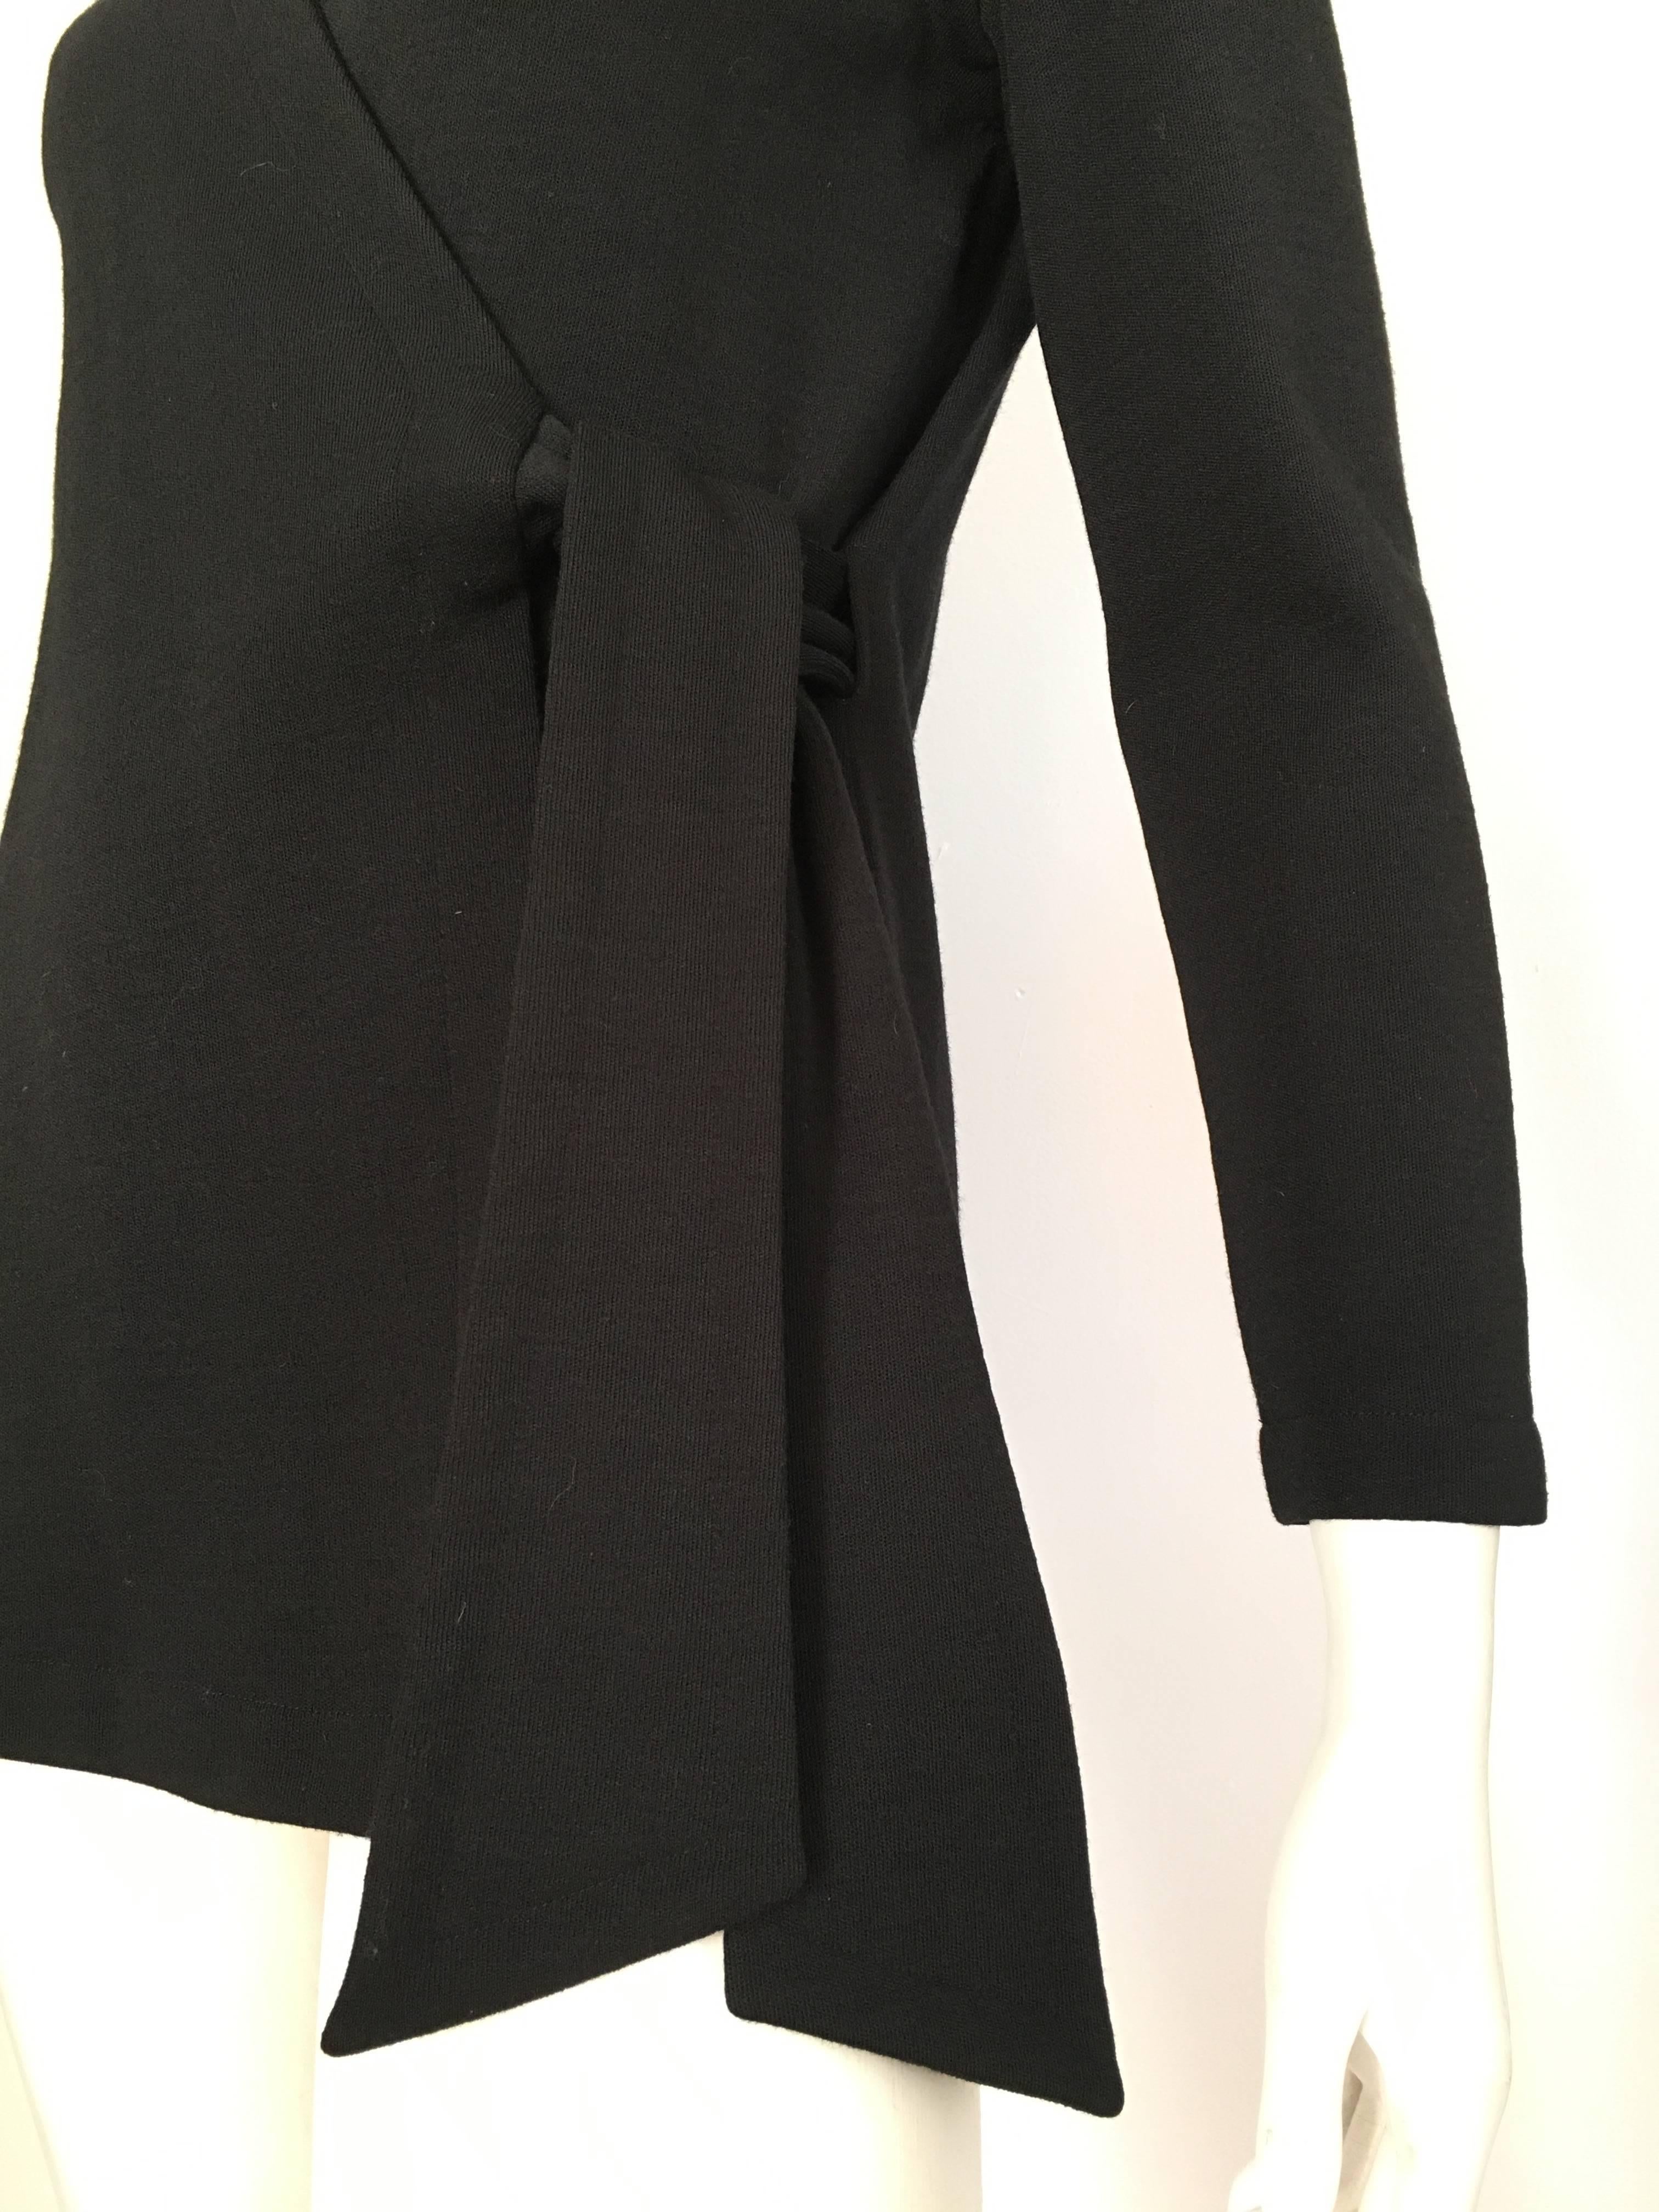 Tom and Linda Platt for Saks Fifth Avenue 1980s Black Wrap Jacket Size Petite. For Sale 4